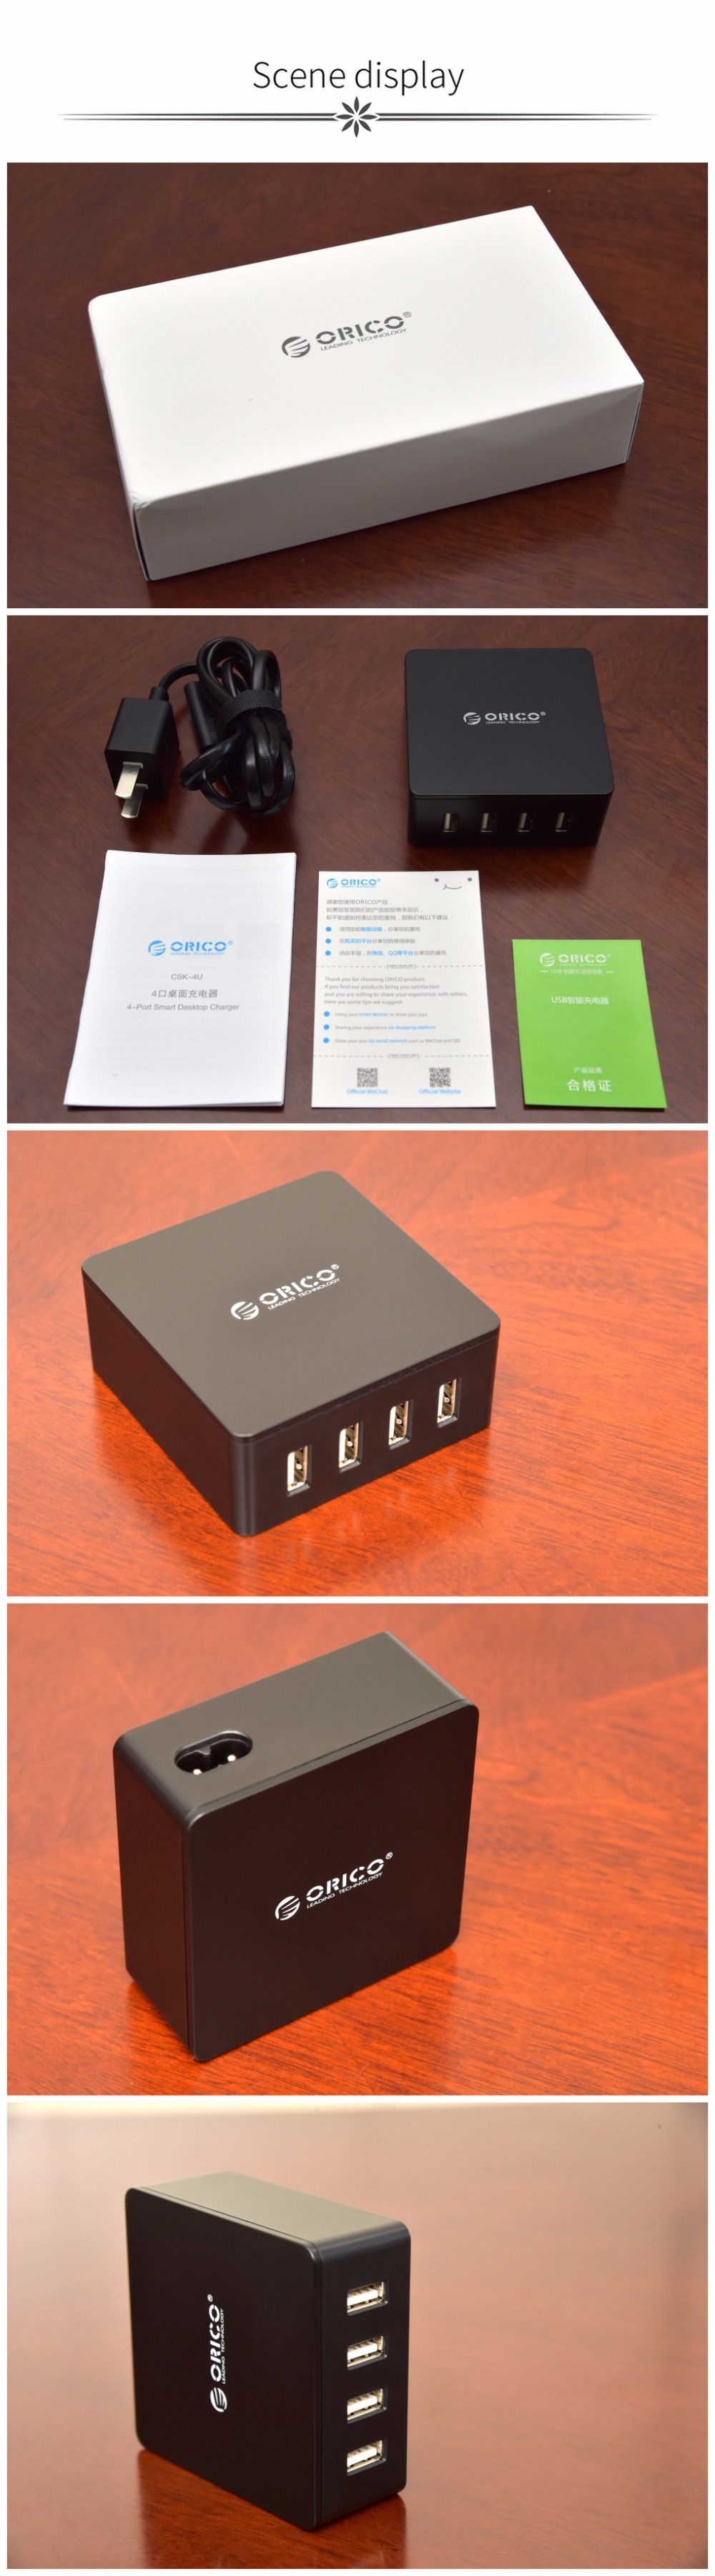 ORICO-USB-Charger-4-Port-EU-Plug-Universal-Smart-Phone-USB-Charger-5V-60A-30W-Output-for-iPhone-11-P-1578466